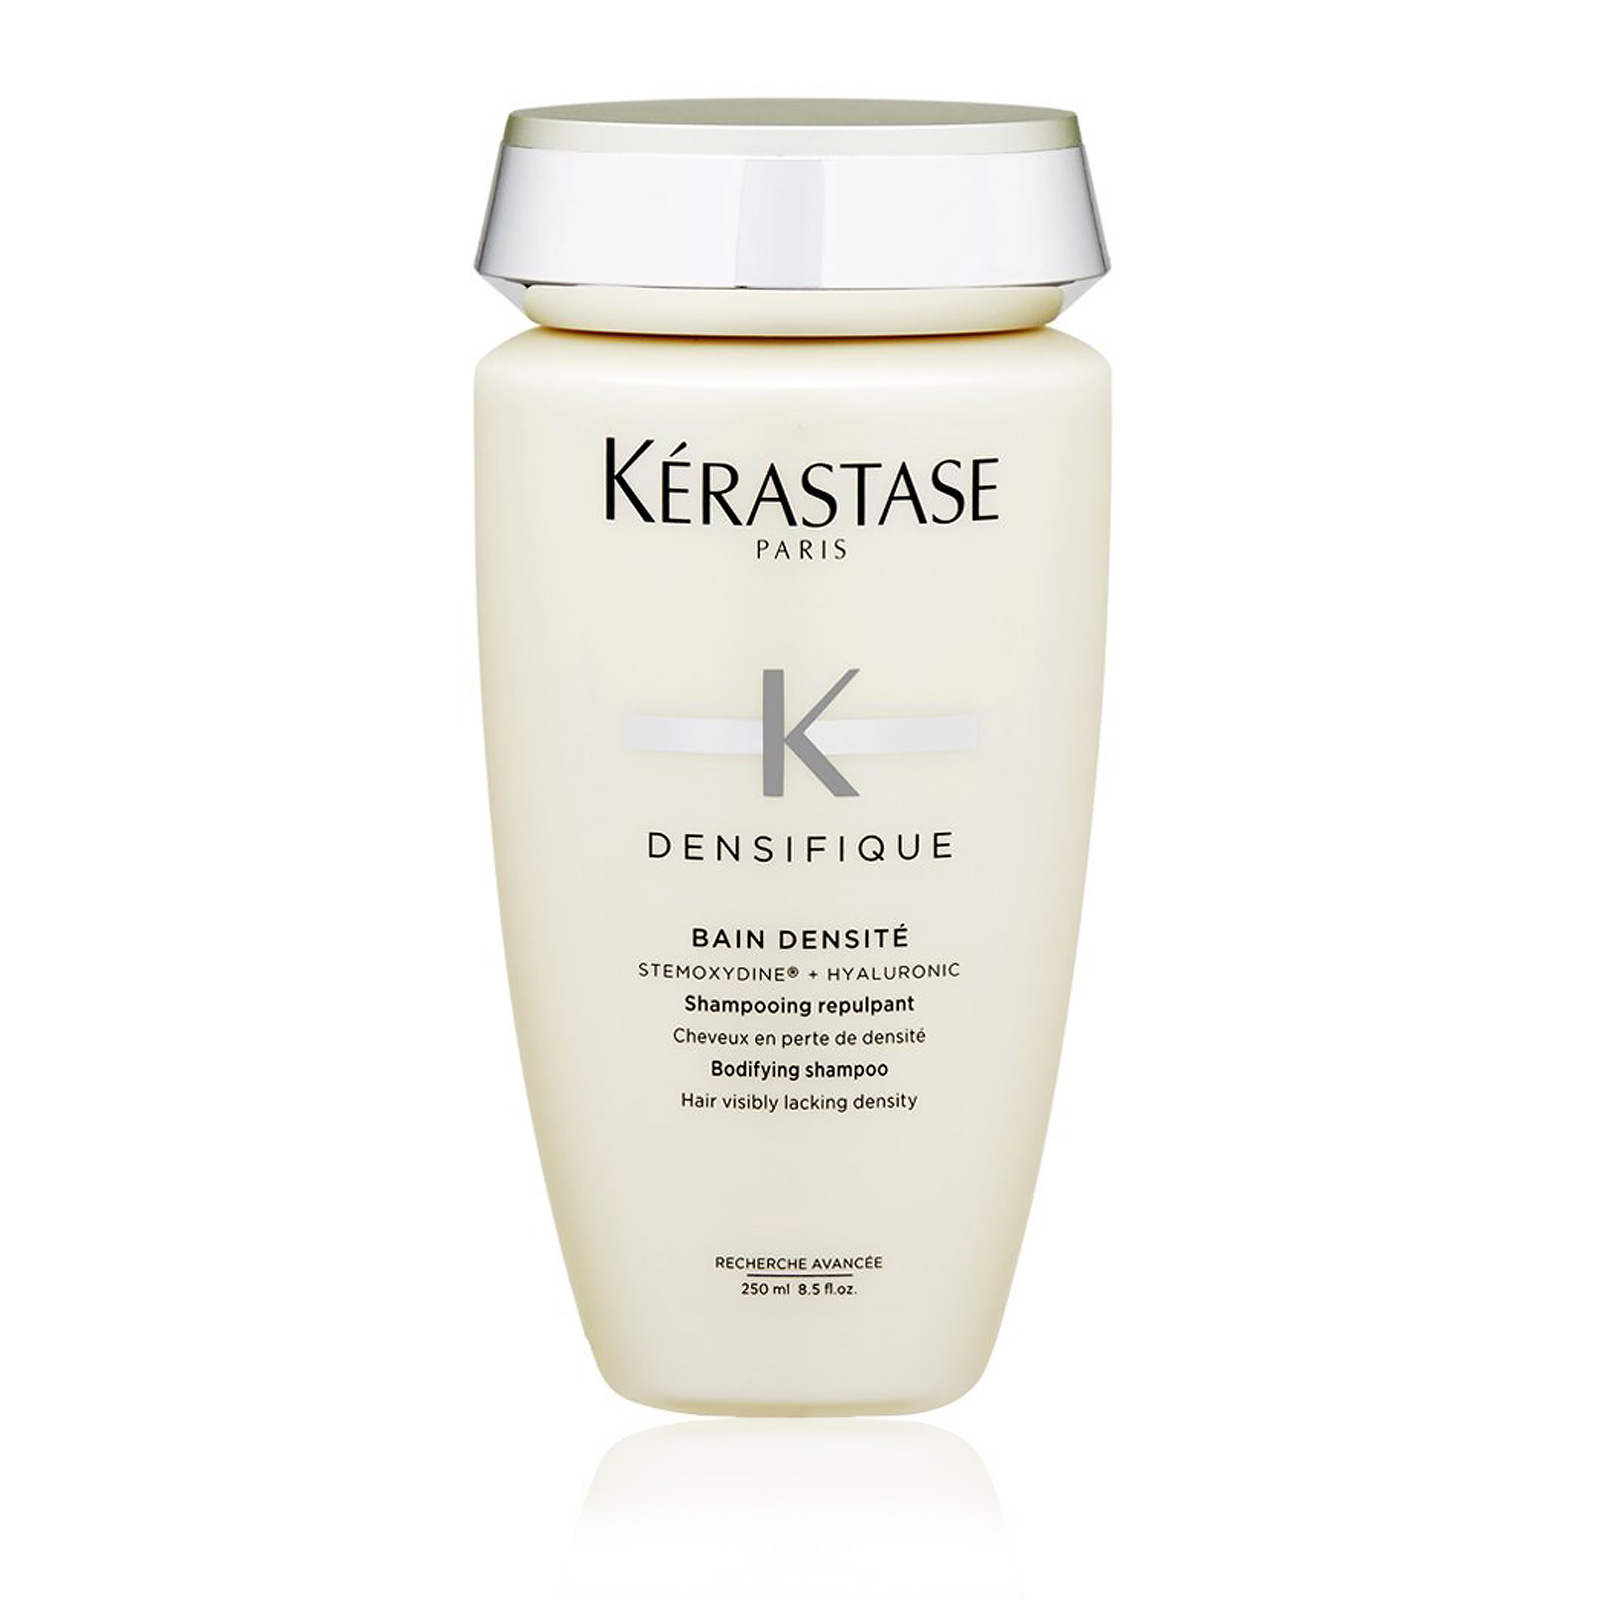 Densifique Bain Densite Bodifying Shampoo (For Hair Visibly Lacking Density)